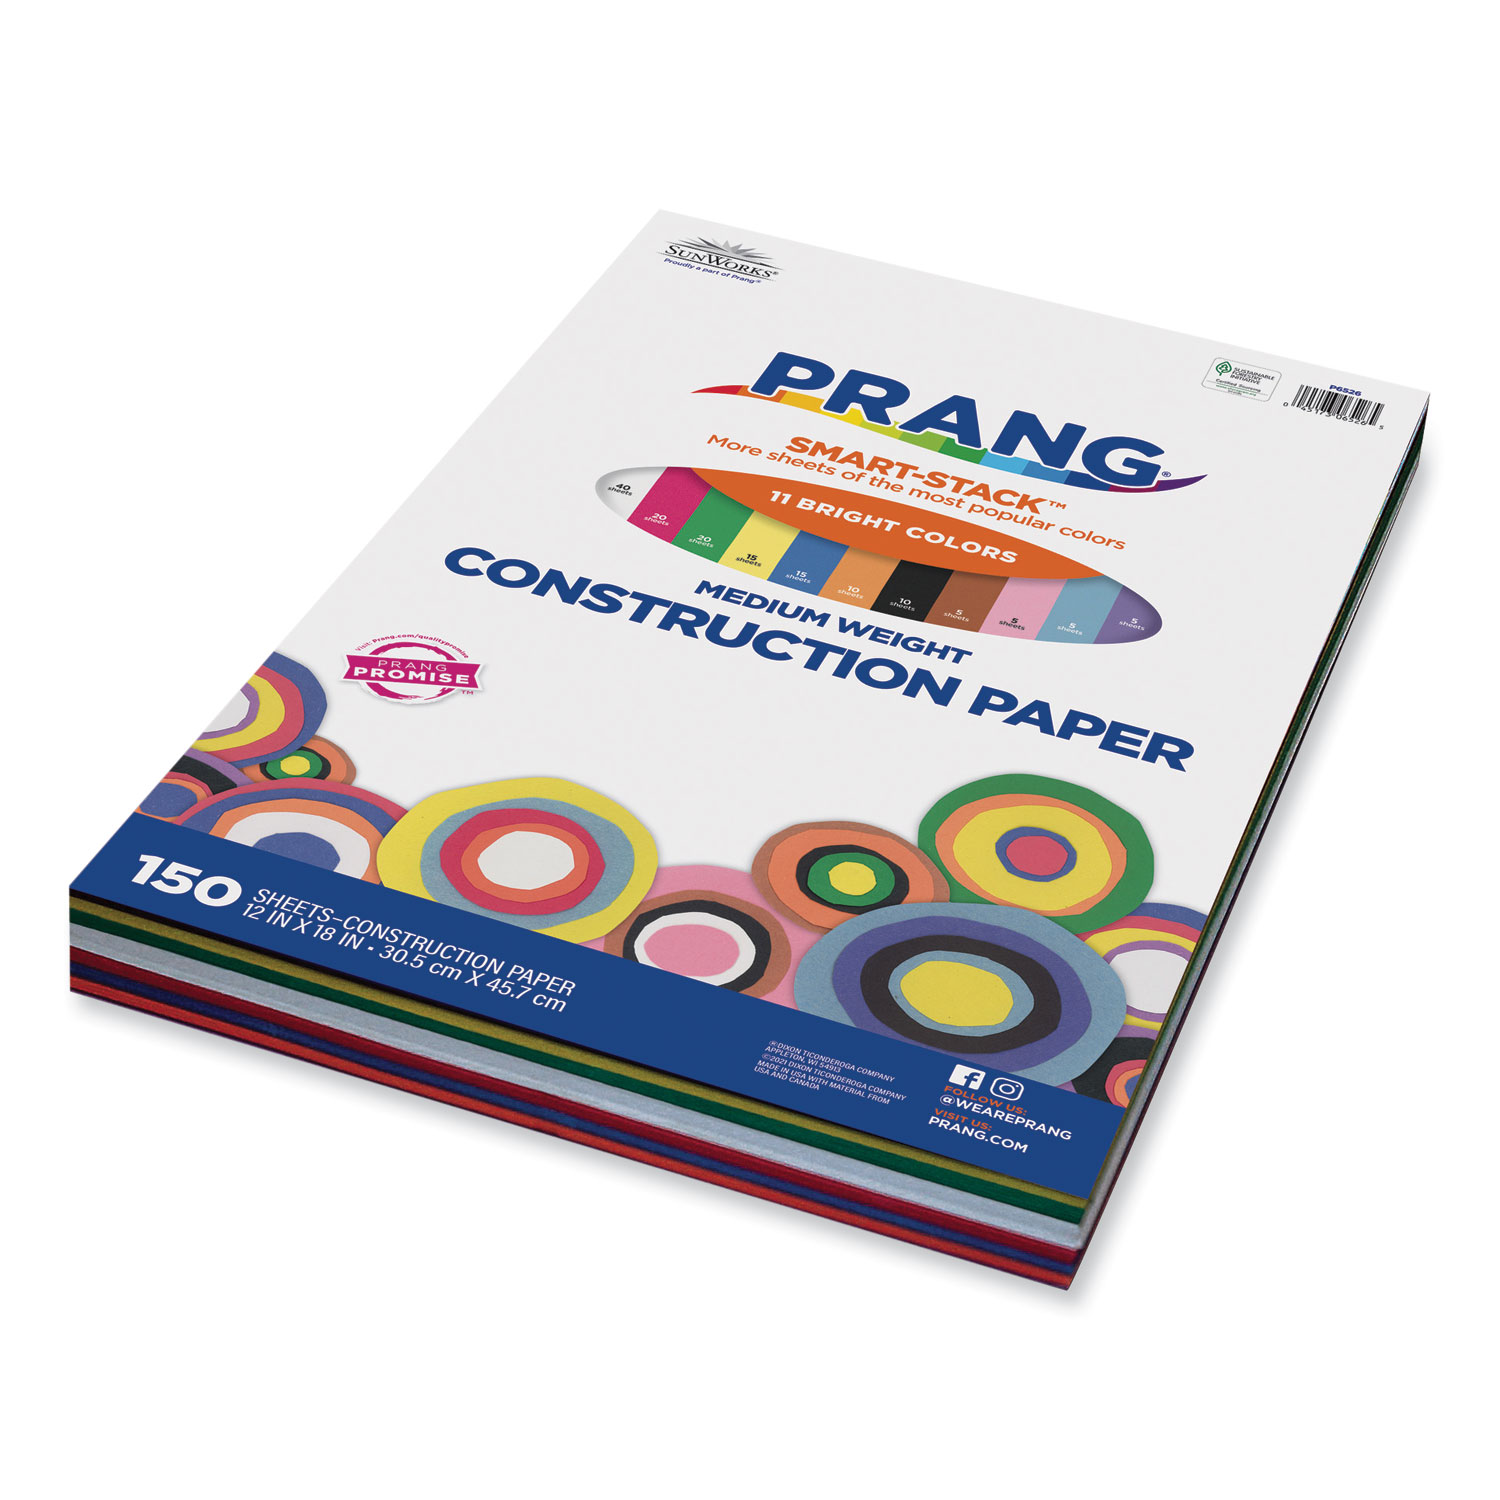 SunWorks Construction Paper, 10 Assorted Colors - 50 sheets